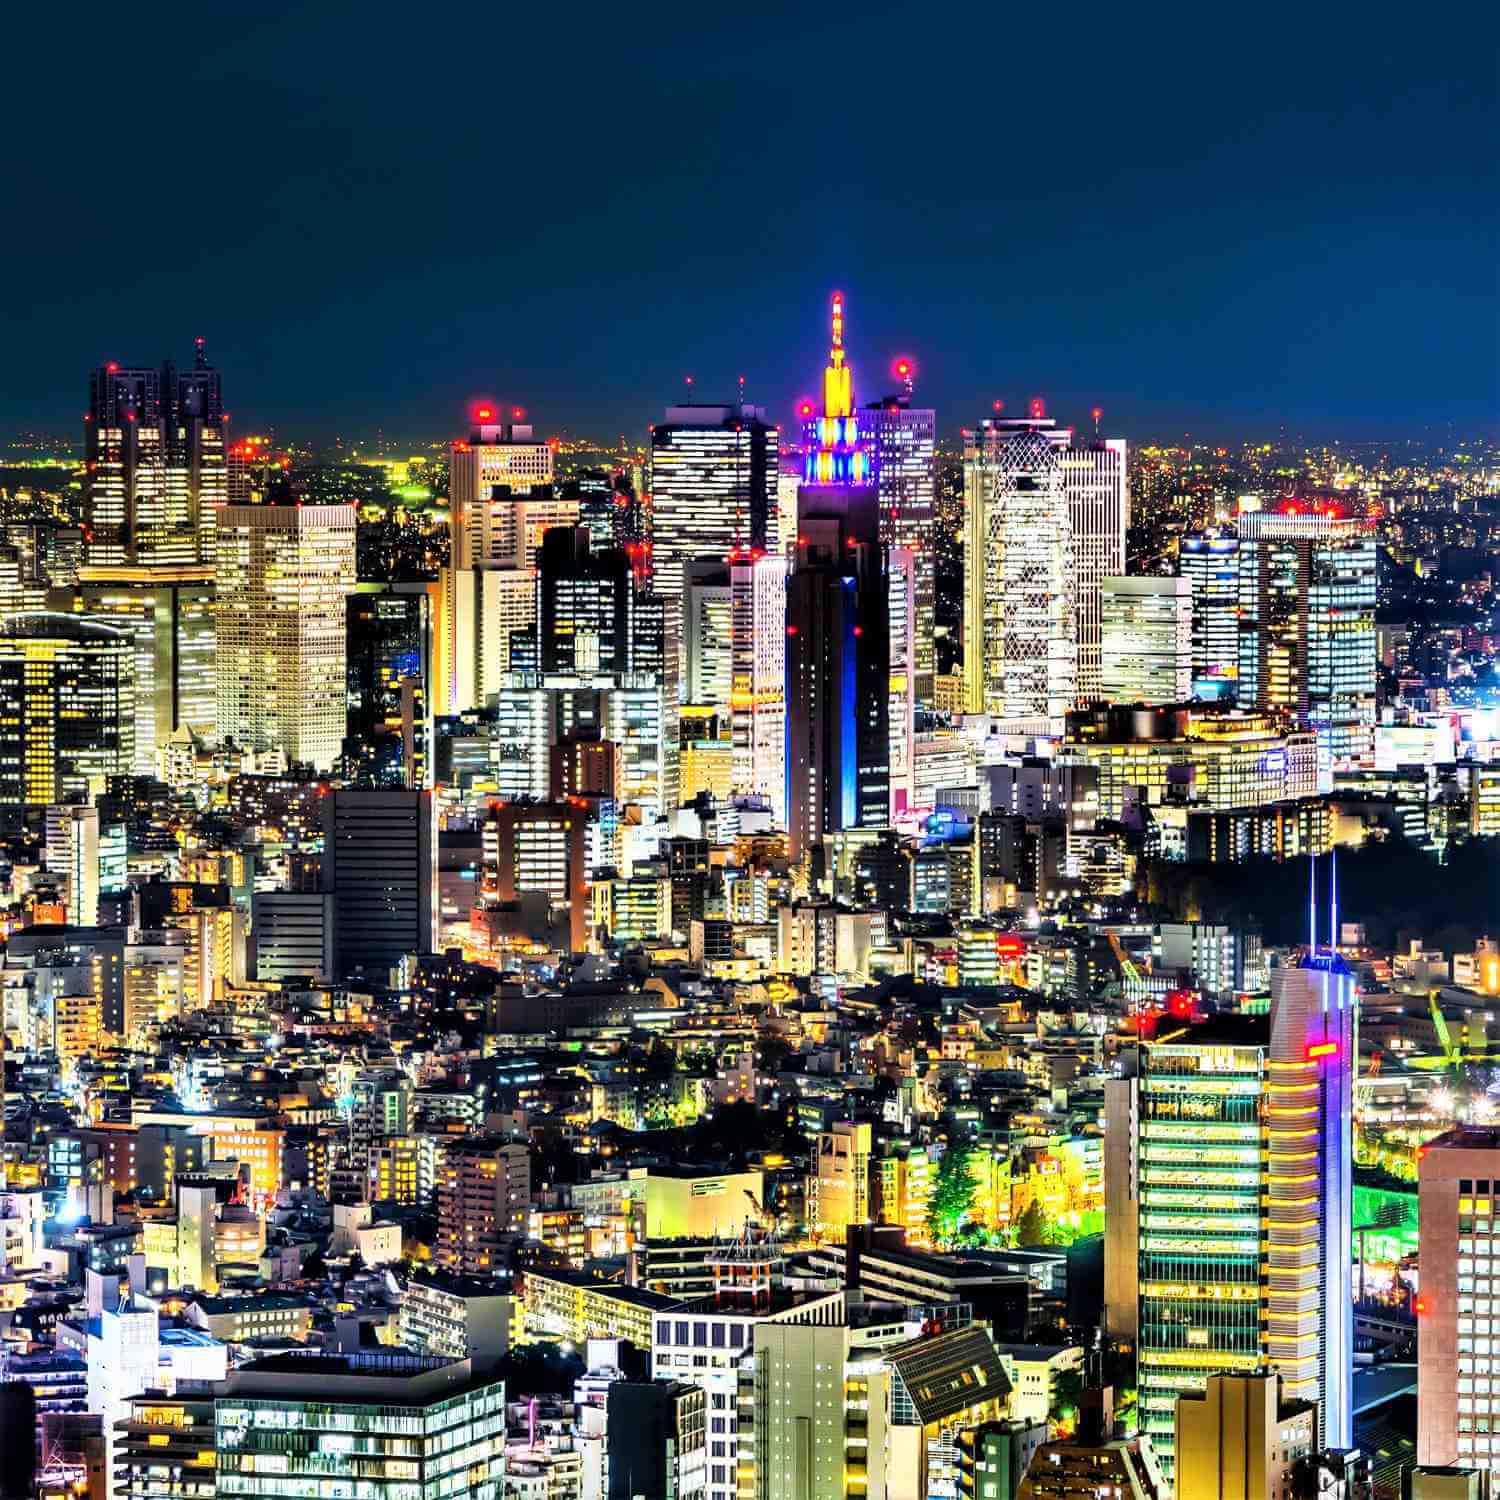 Roppongi Hills Mori Tower in Tokyo = Shutterstock 10